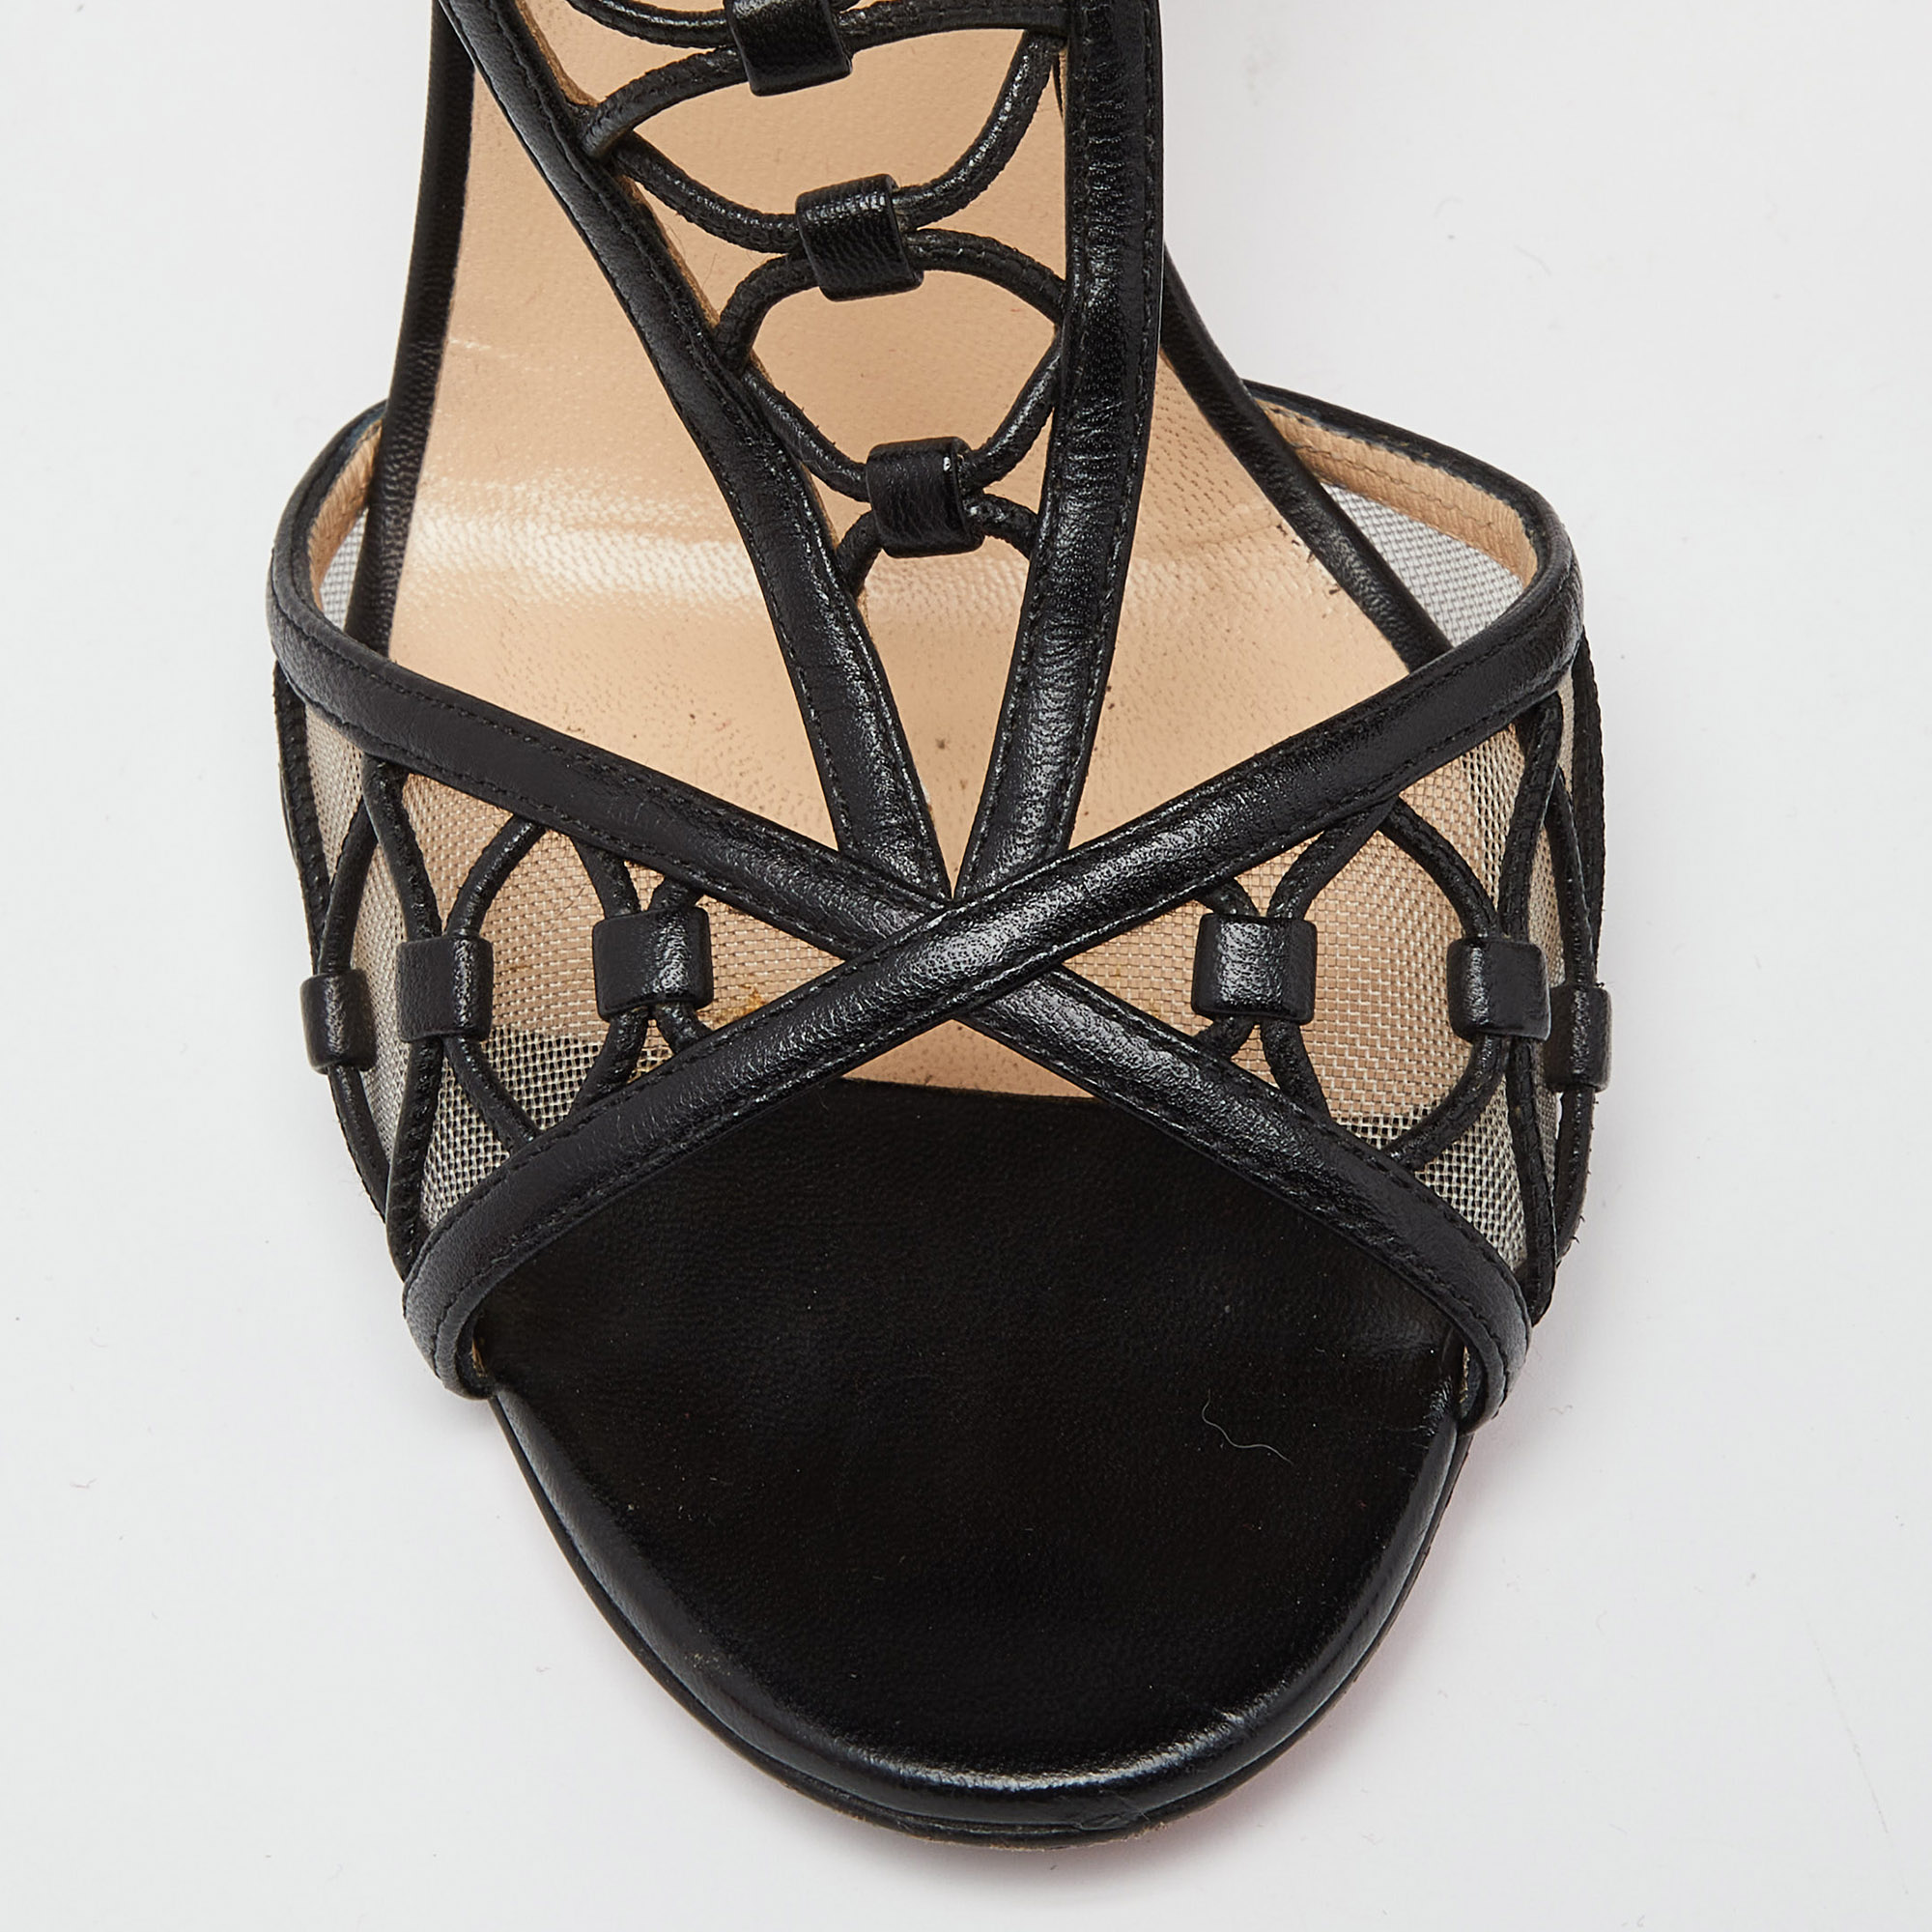 Christian Louboutin Black Leather Martha Lattice Sandals Size 39